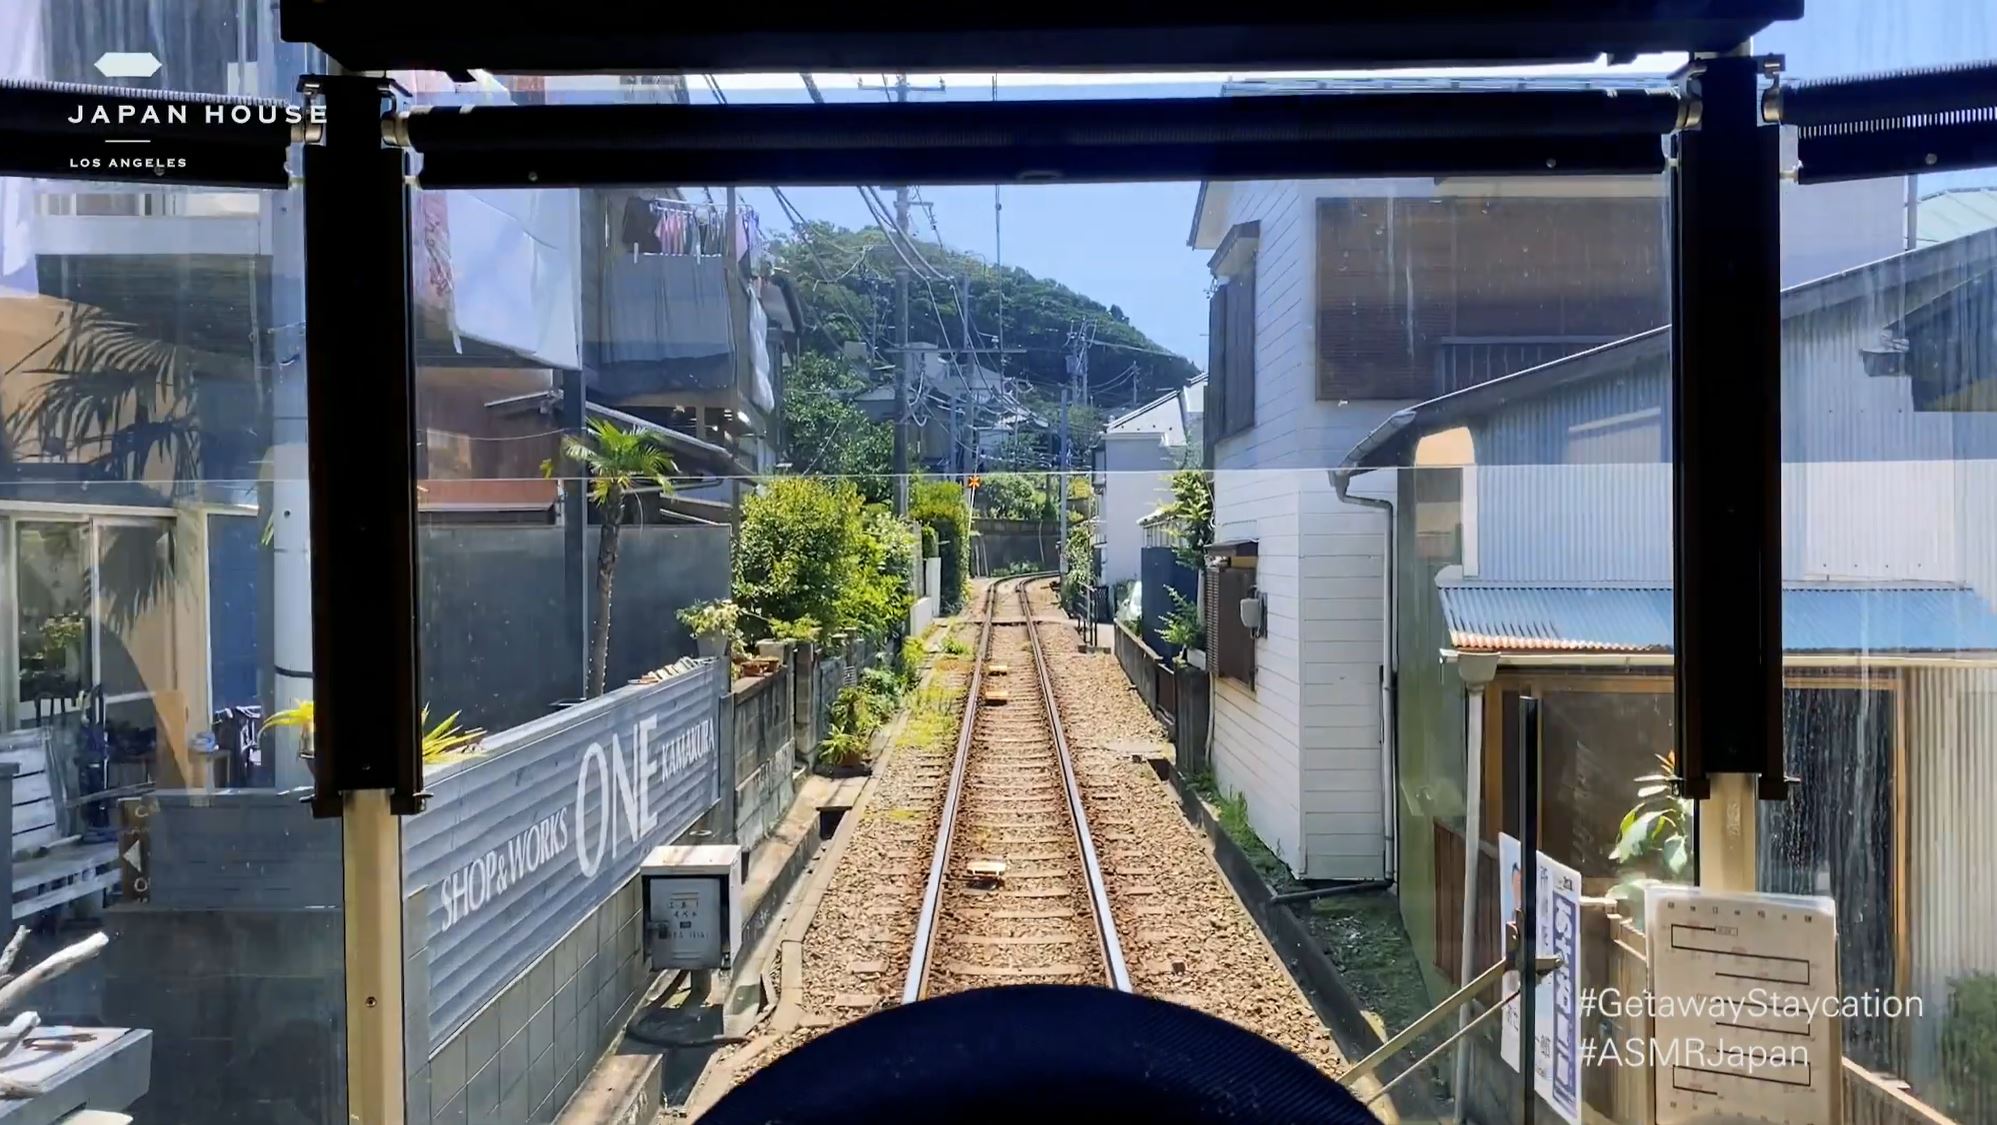 Explore Japan on a train